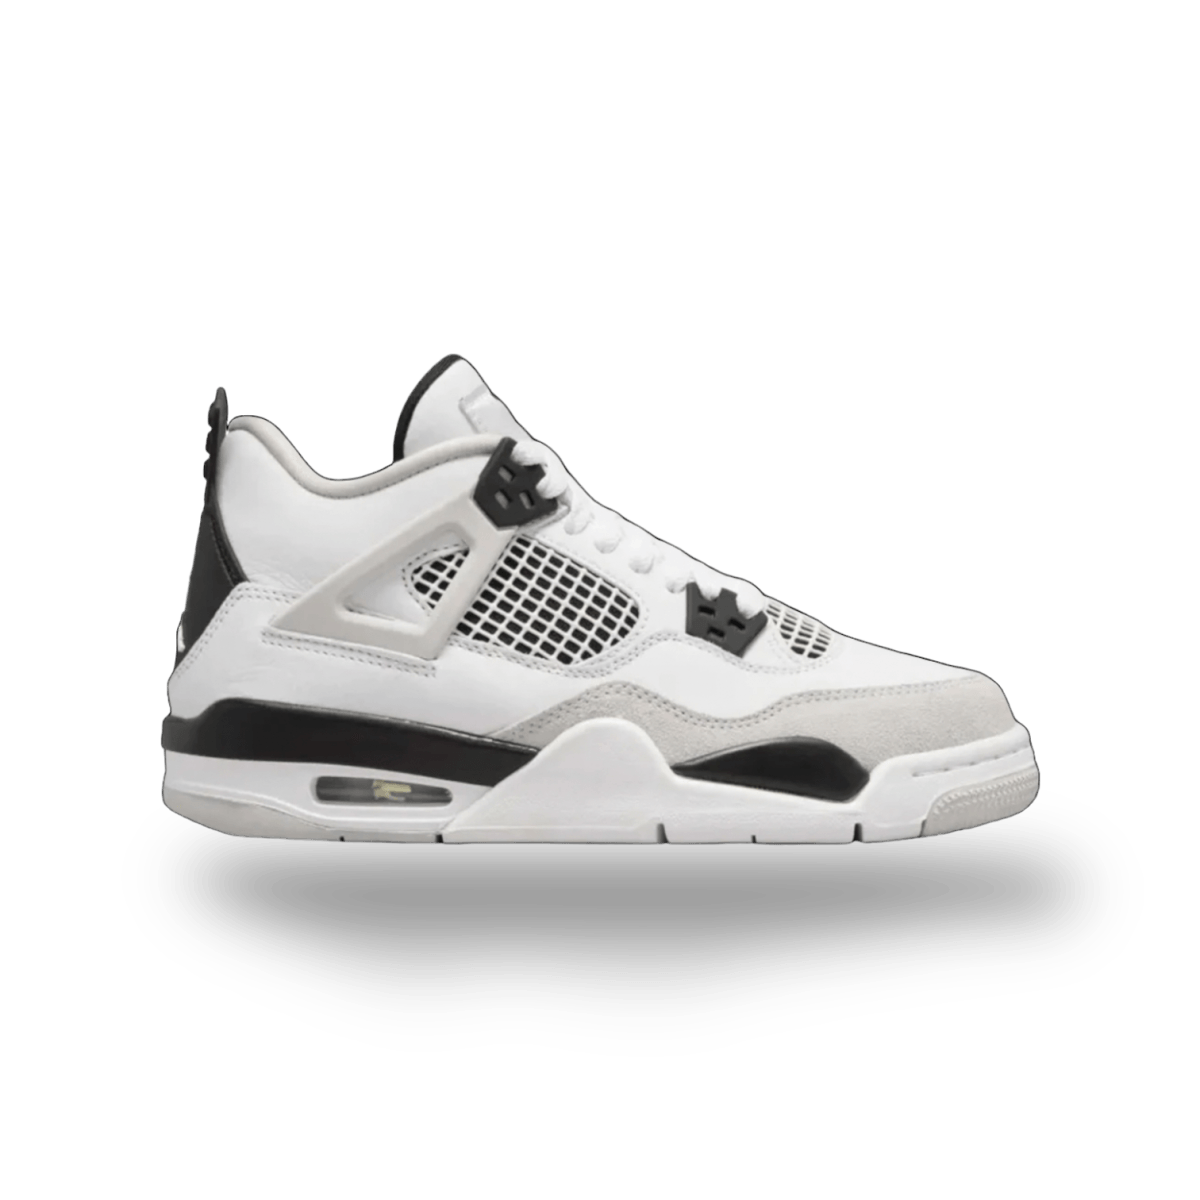 Jordan 4 Retro Military Black - Toddler - Mid Sneaker - Jawns on Fire Sneakers & Streetwear